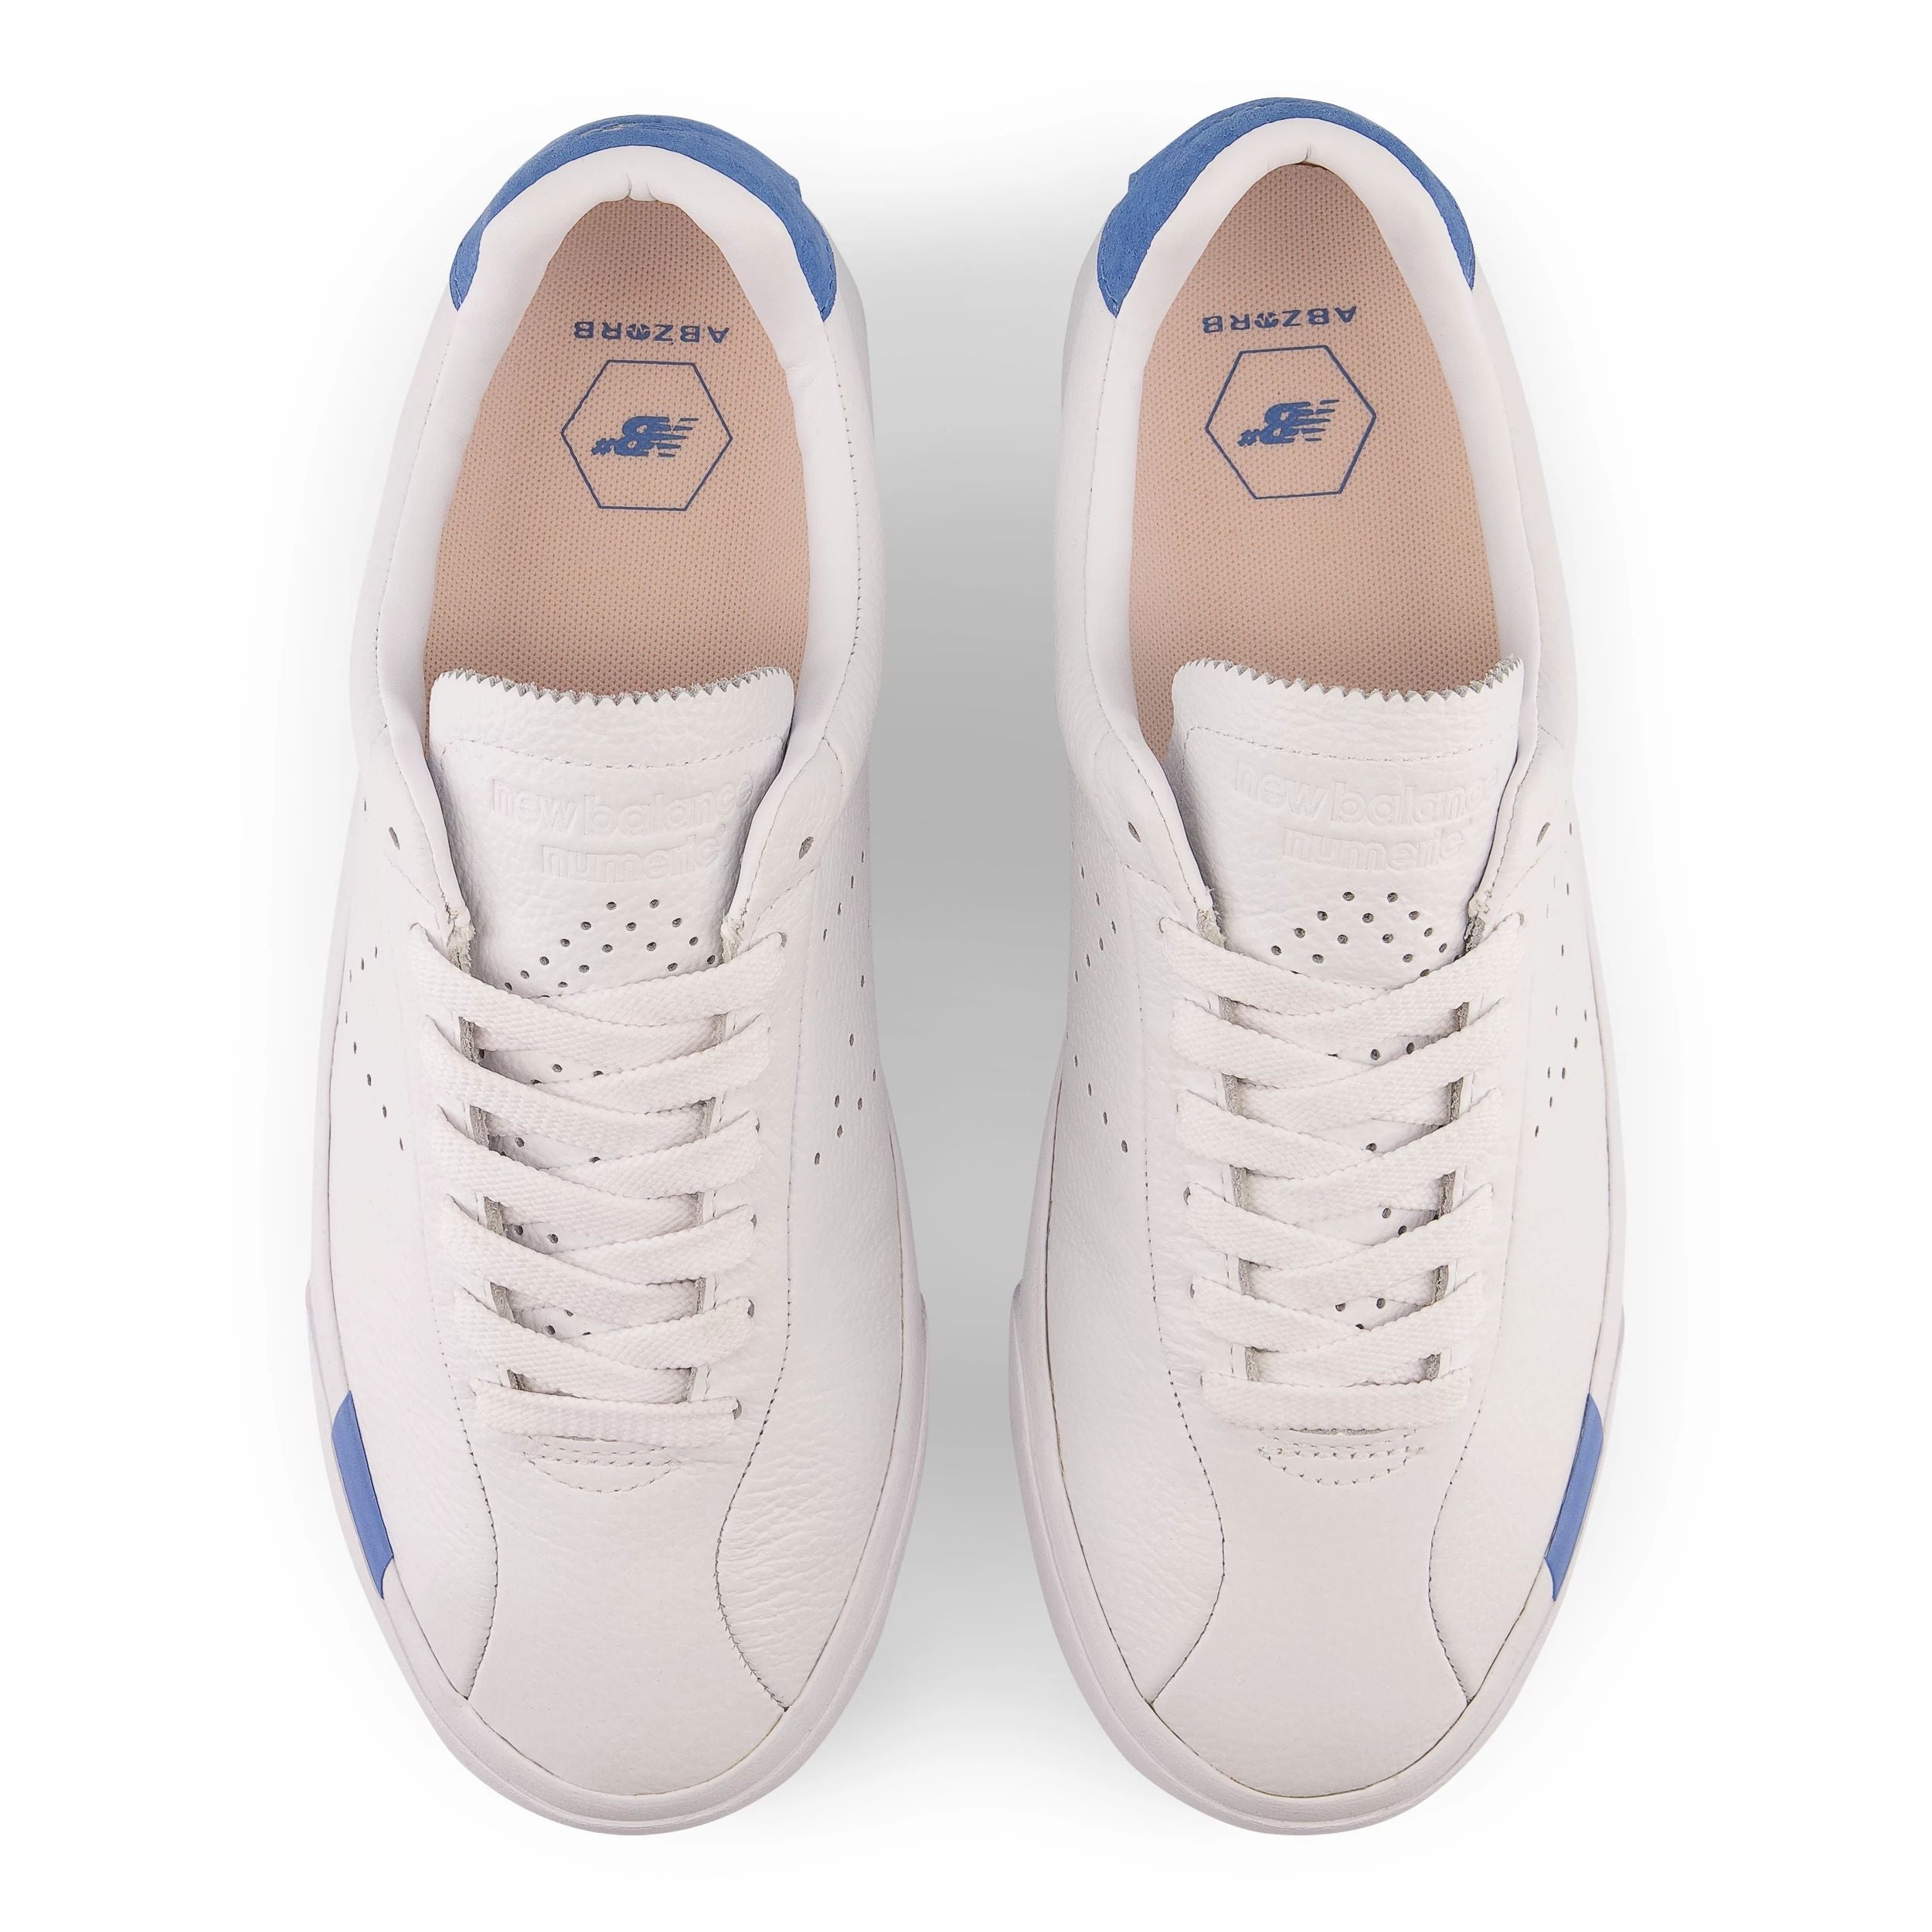 White/Blue NM22 NB Numeric Skate Shoe Top